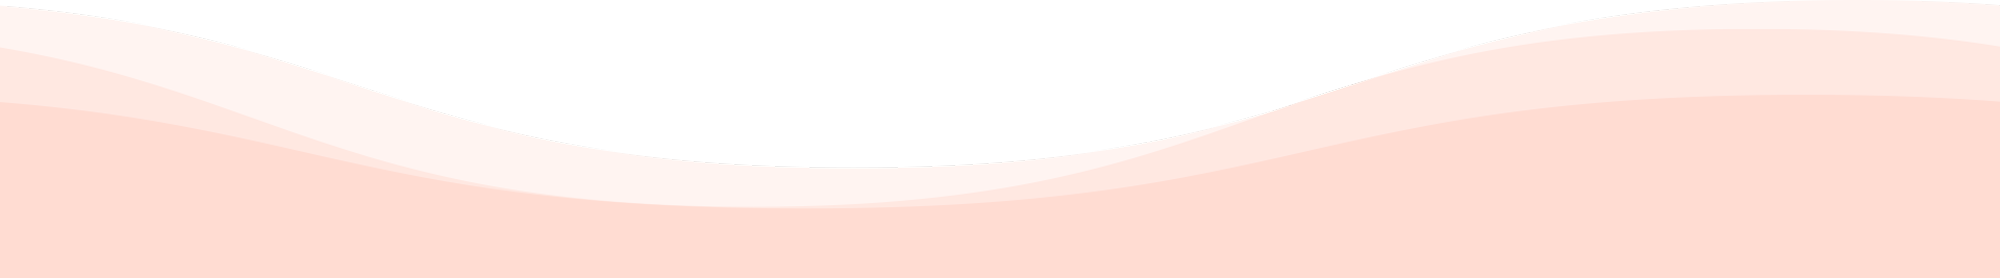 Pink lower border